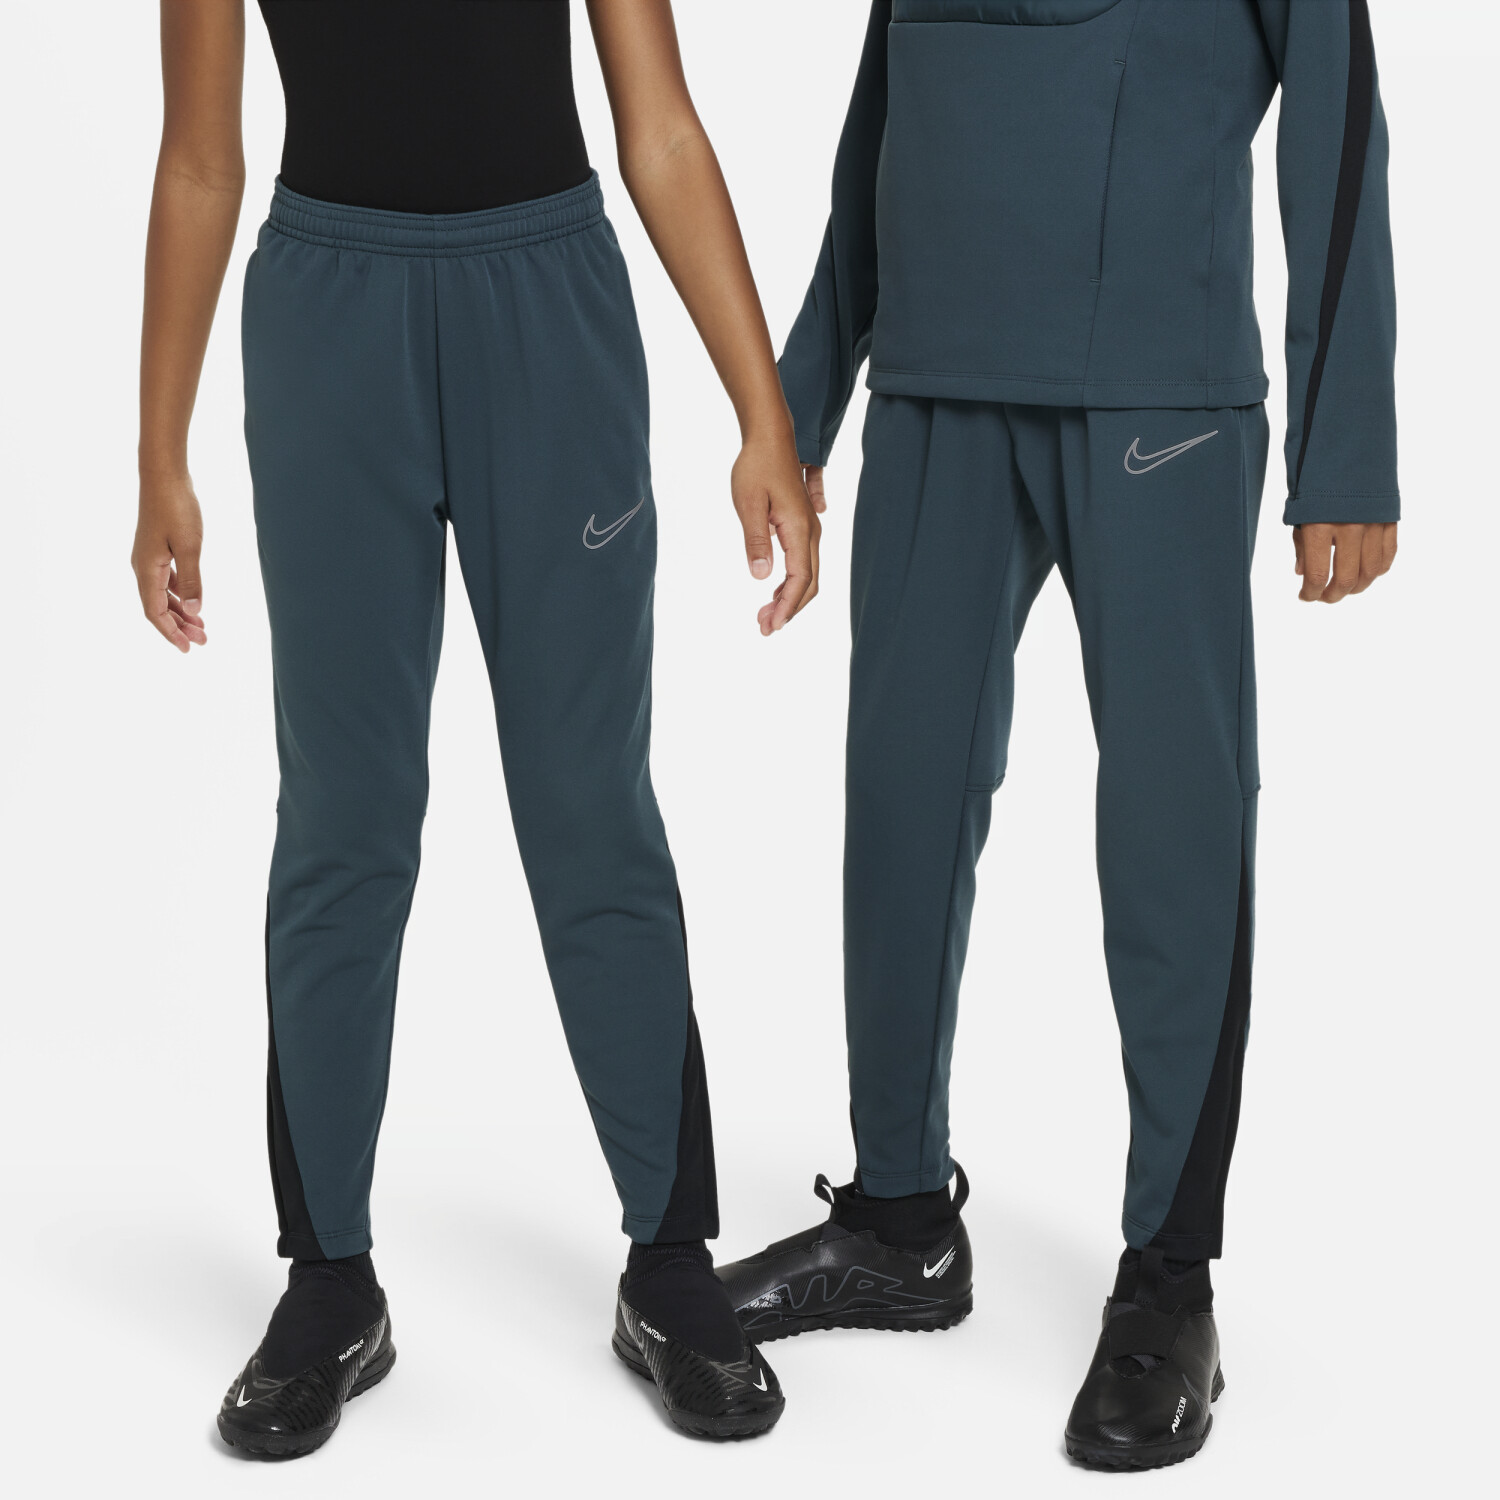 Kinder Preisvergleich Therma-FIT Fußballhose ab Academy grün € | 34,95 Nike Nike bei (FJ6182)